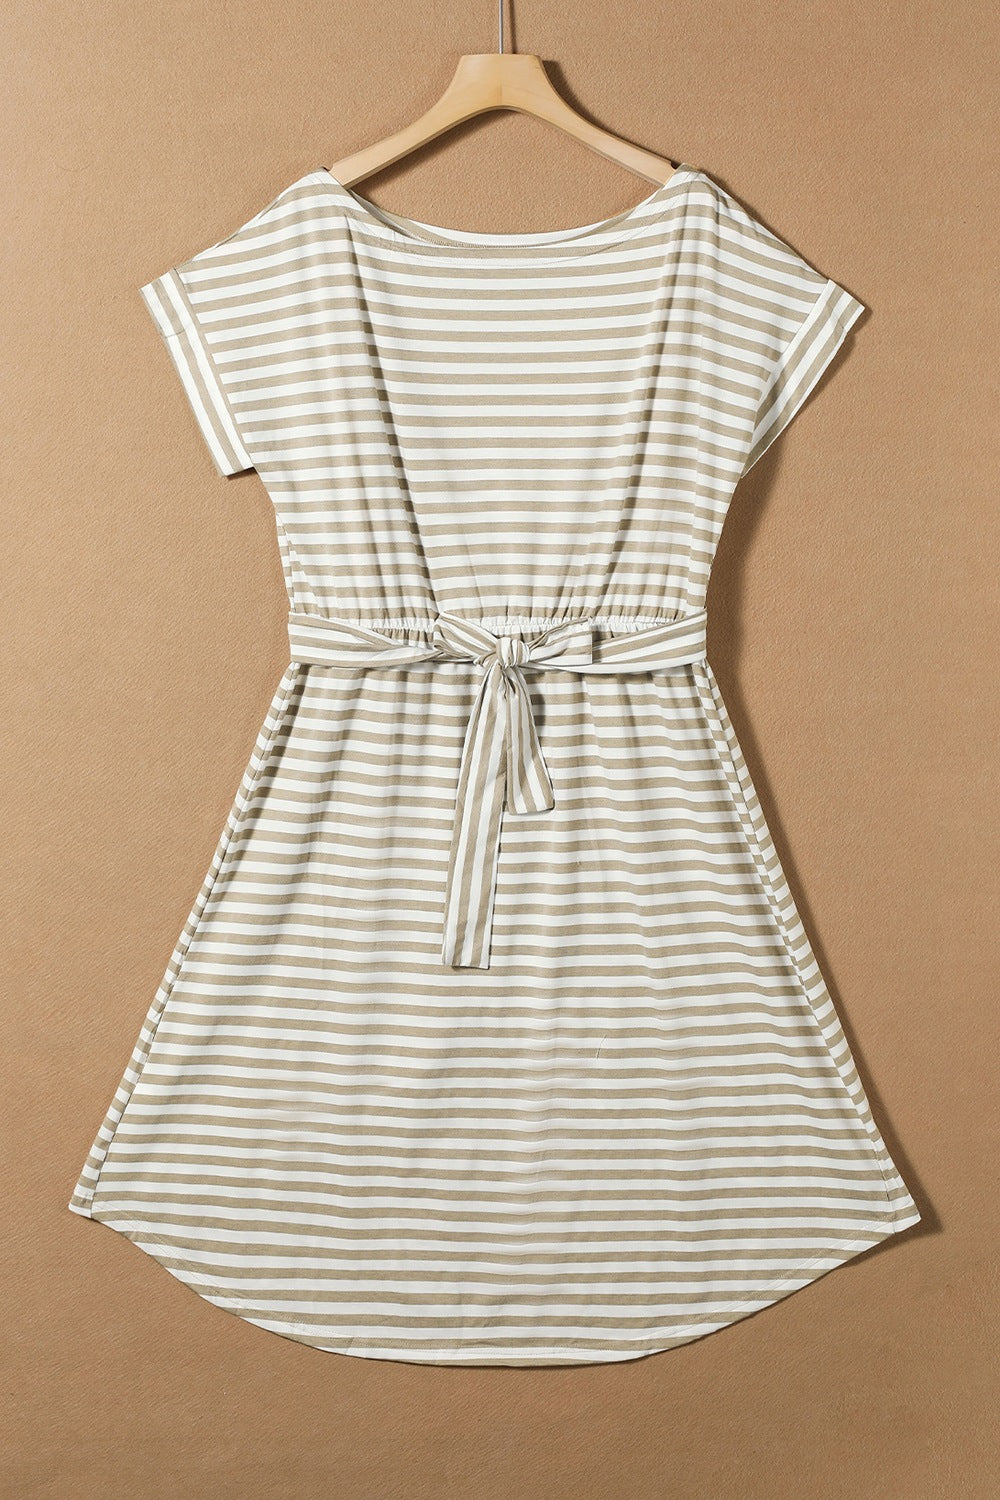 TEEK - Tied Striped Cap Sleeve Dress DRESS TEEK Trend   